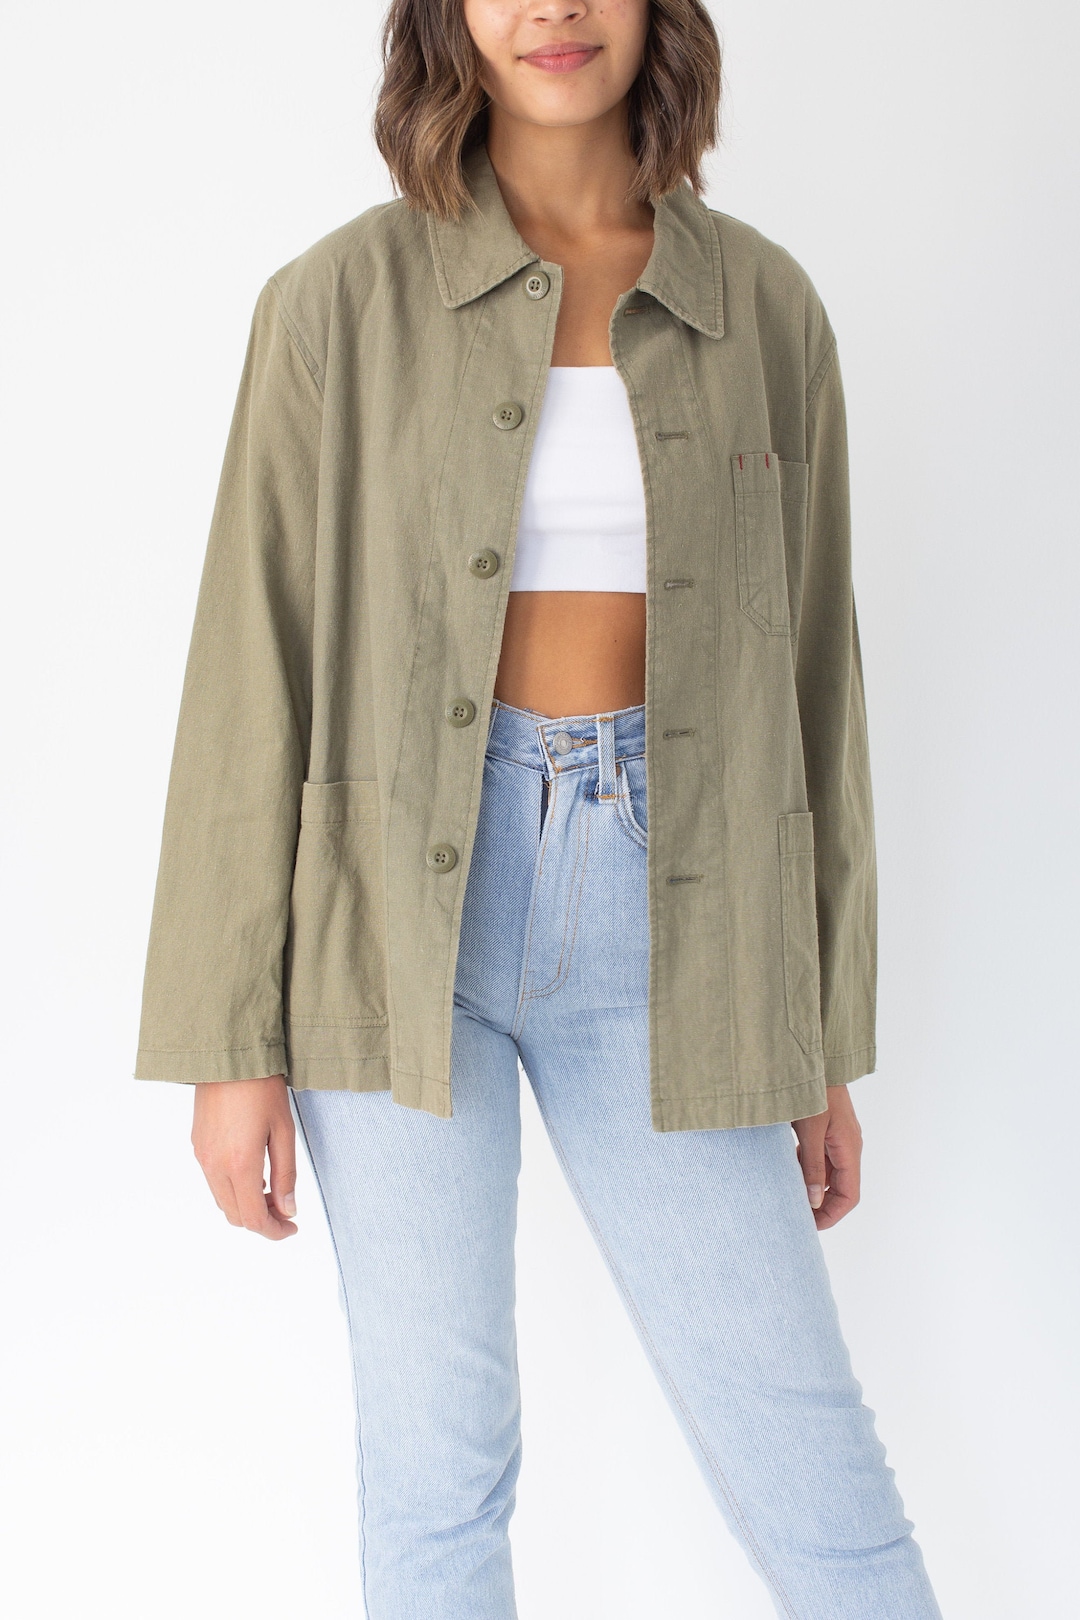 Khaki Linen Jacket Blazer Spring Summer Size XS/S/M - Etsy